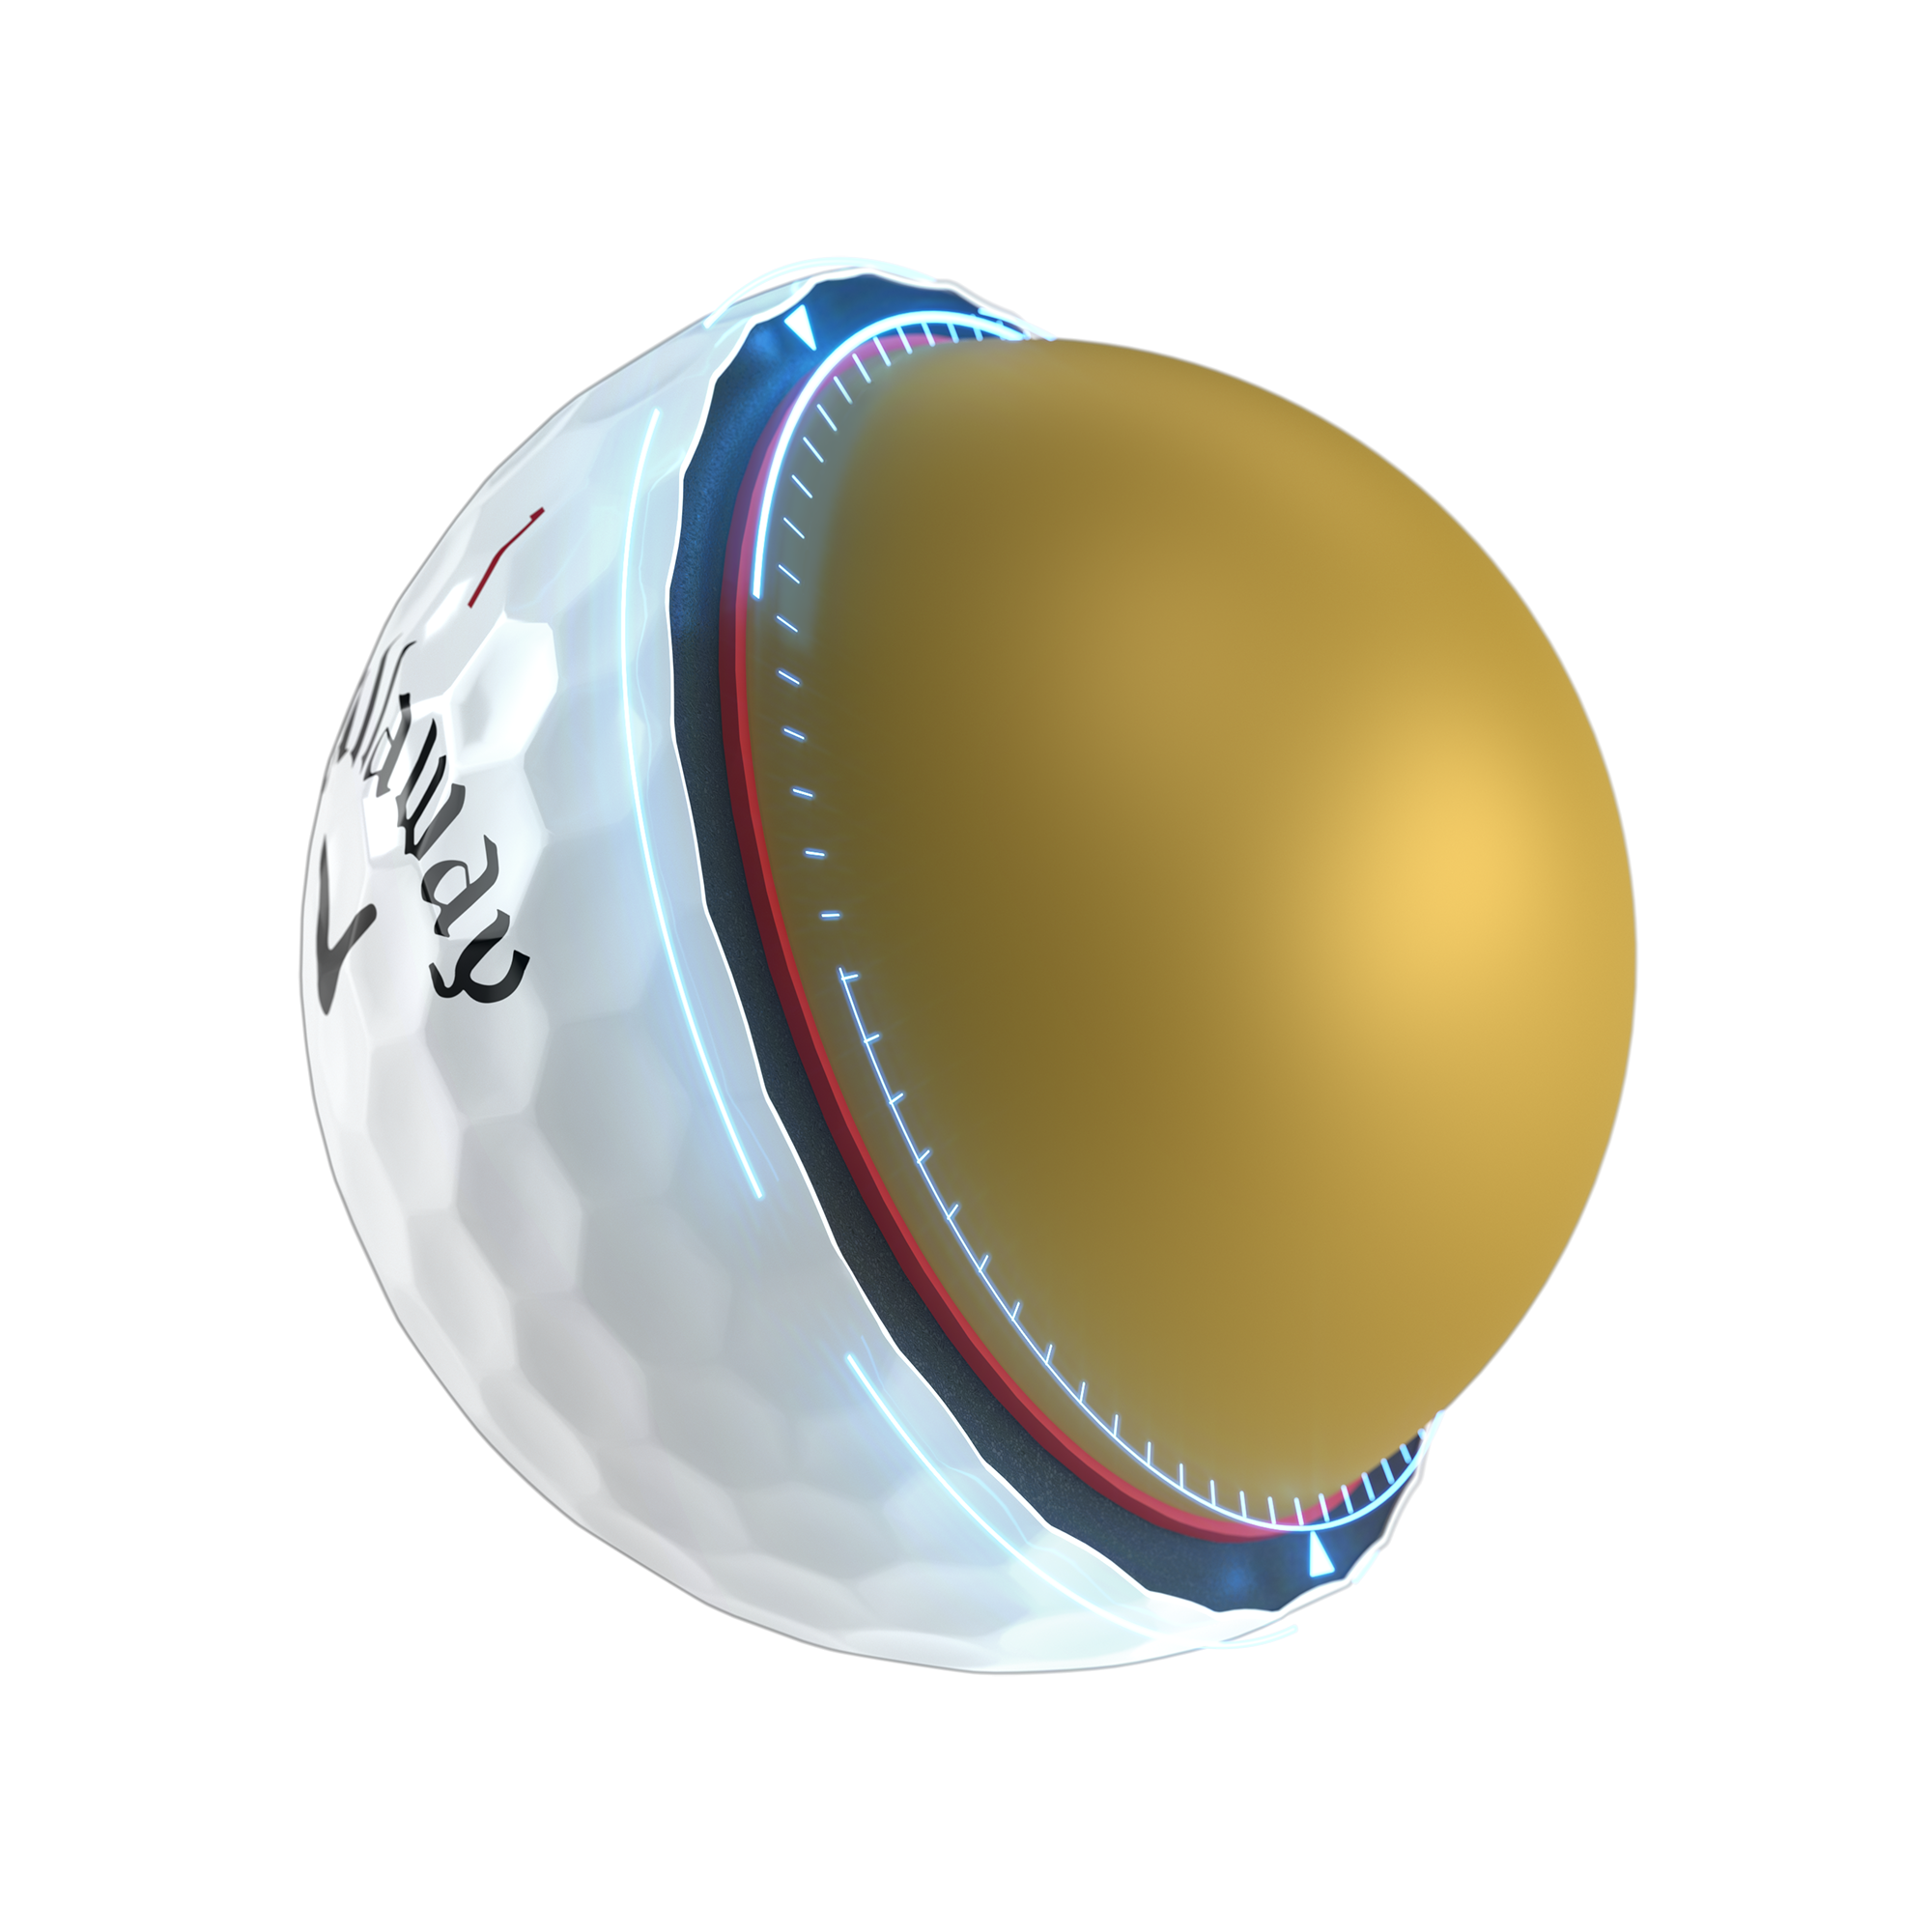 Chrome Tour Triple Track 2024 Personalized Golf Balls